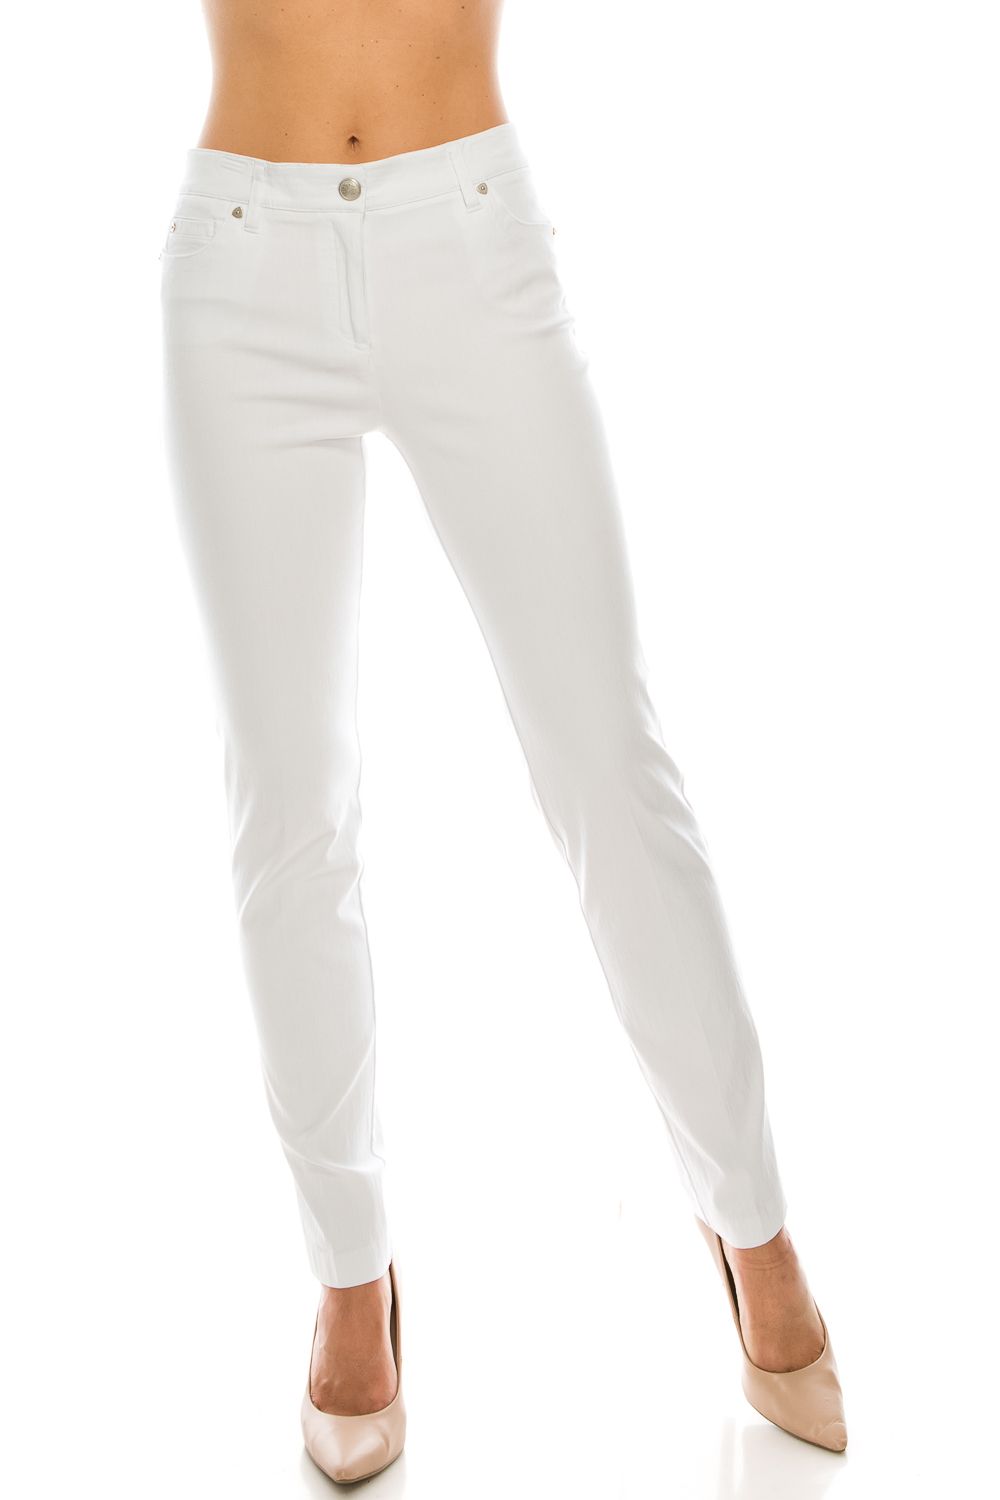 Zac & Rachael White Faux-Denim Jeggings, Sizes 6 & 12 Available, Women's Apparel, Casual Pants, Attire, Leggings